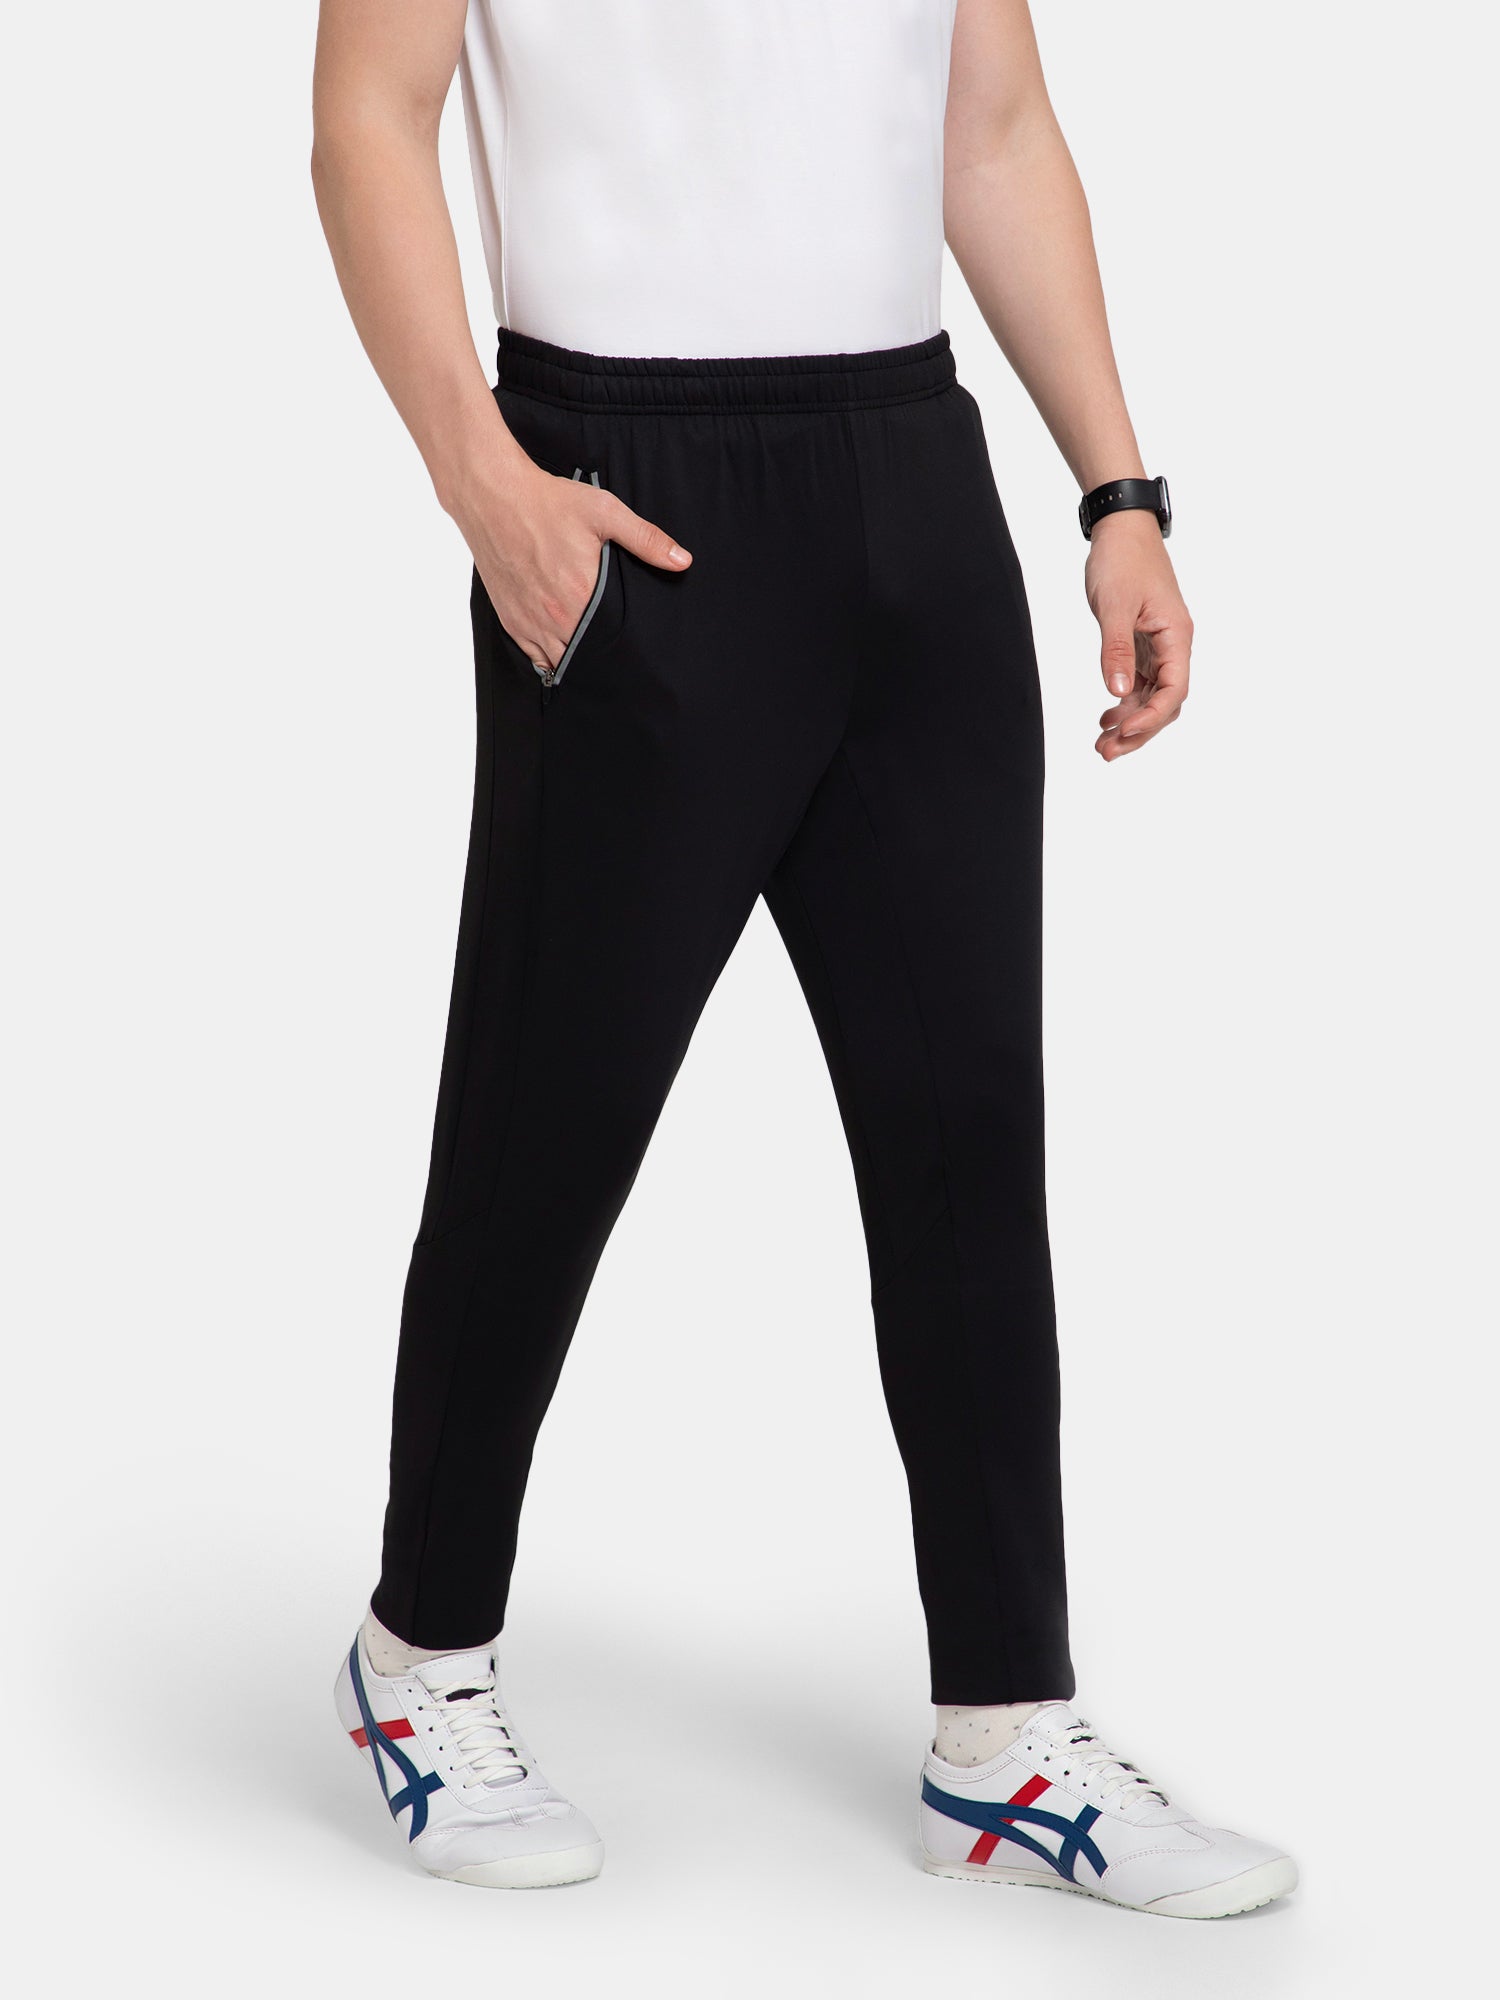 Nike Black Track Pants | Men | Junkyard